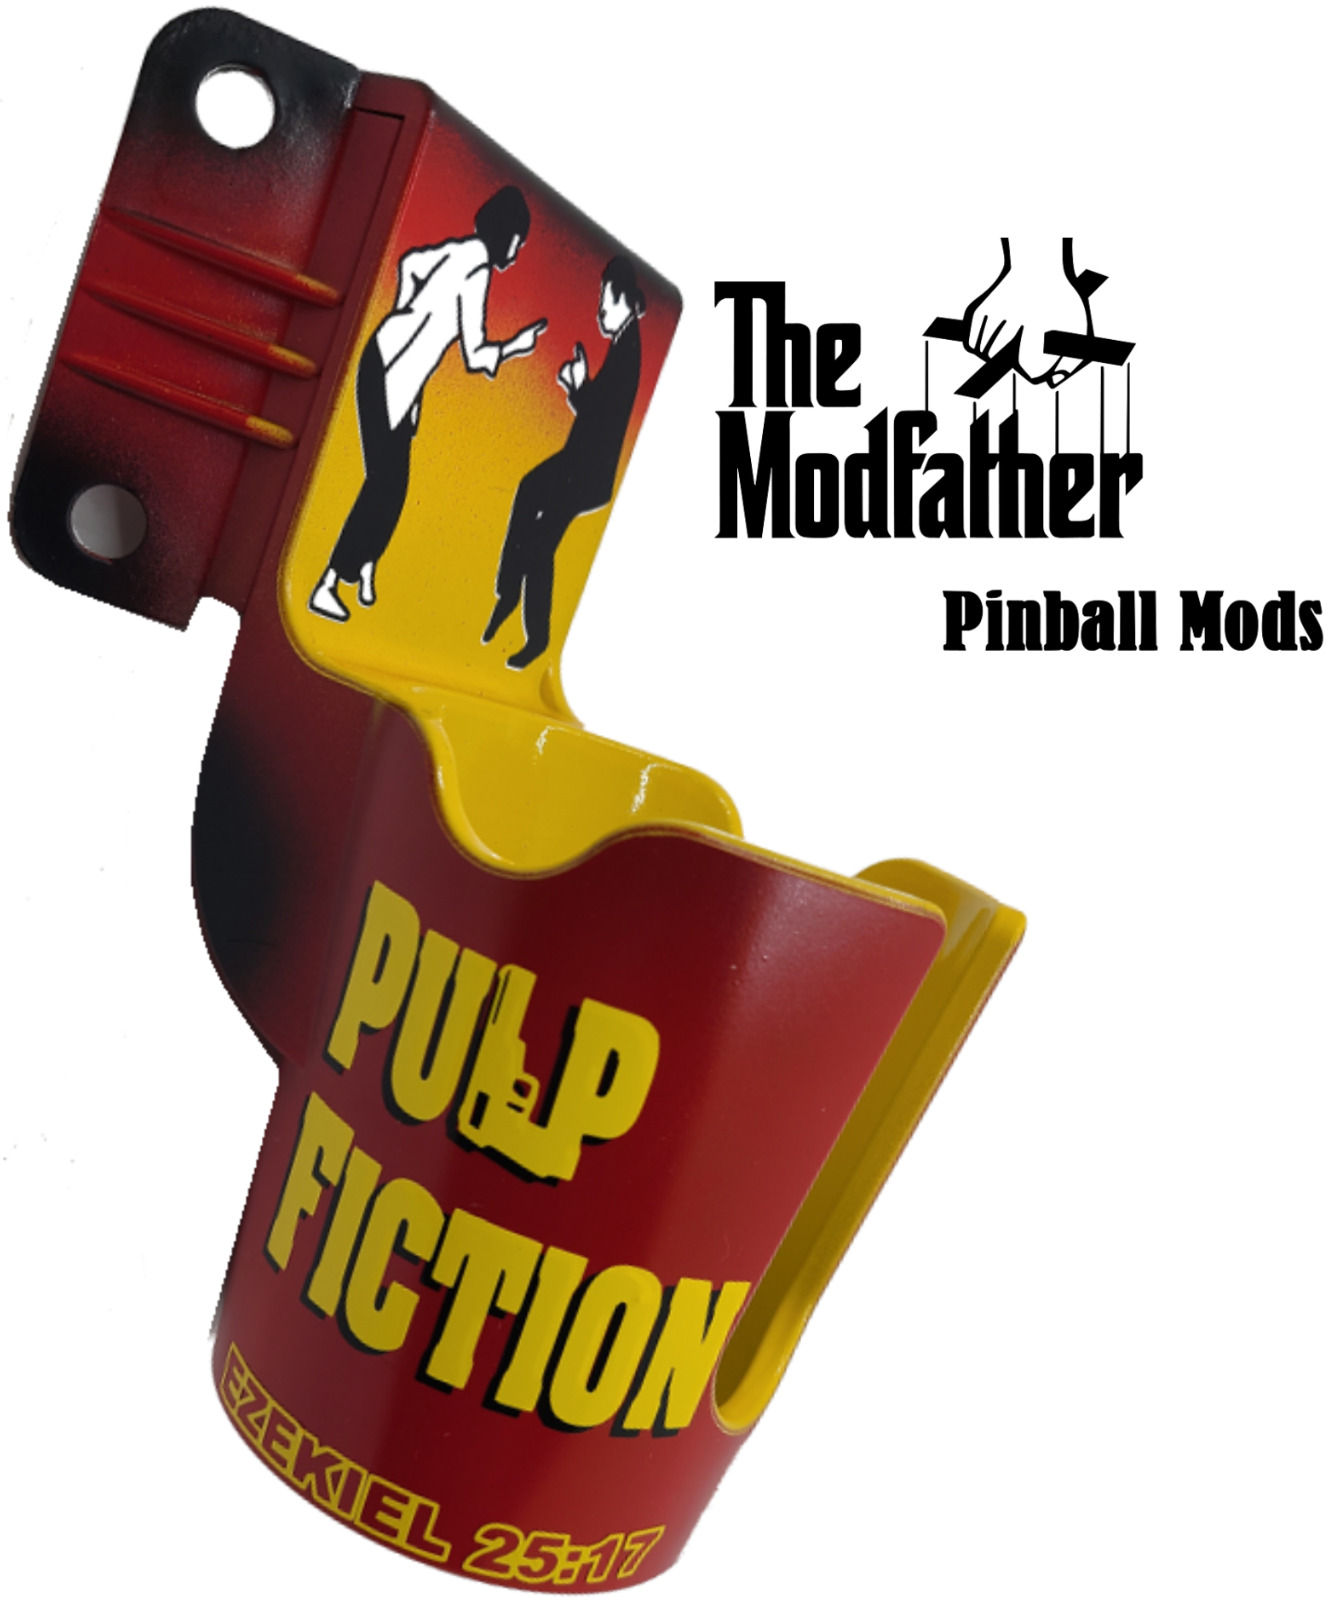 Pulp Fiction Pinball Pincup Mod